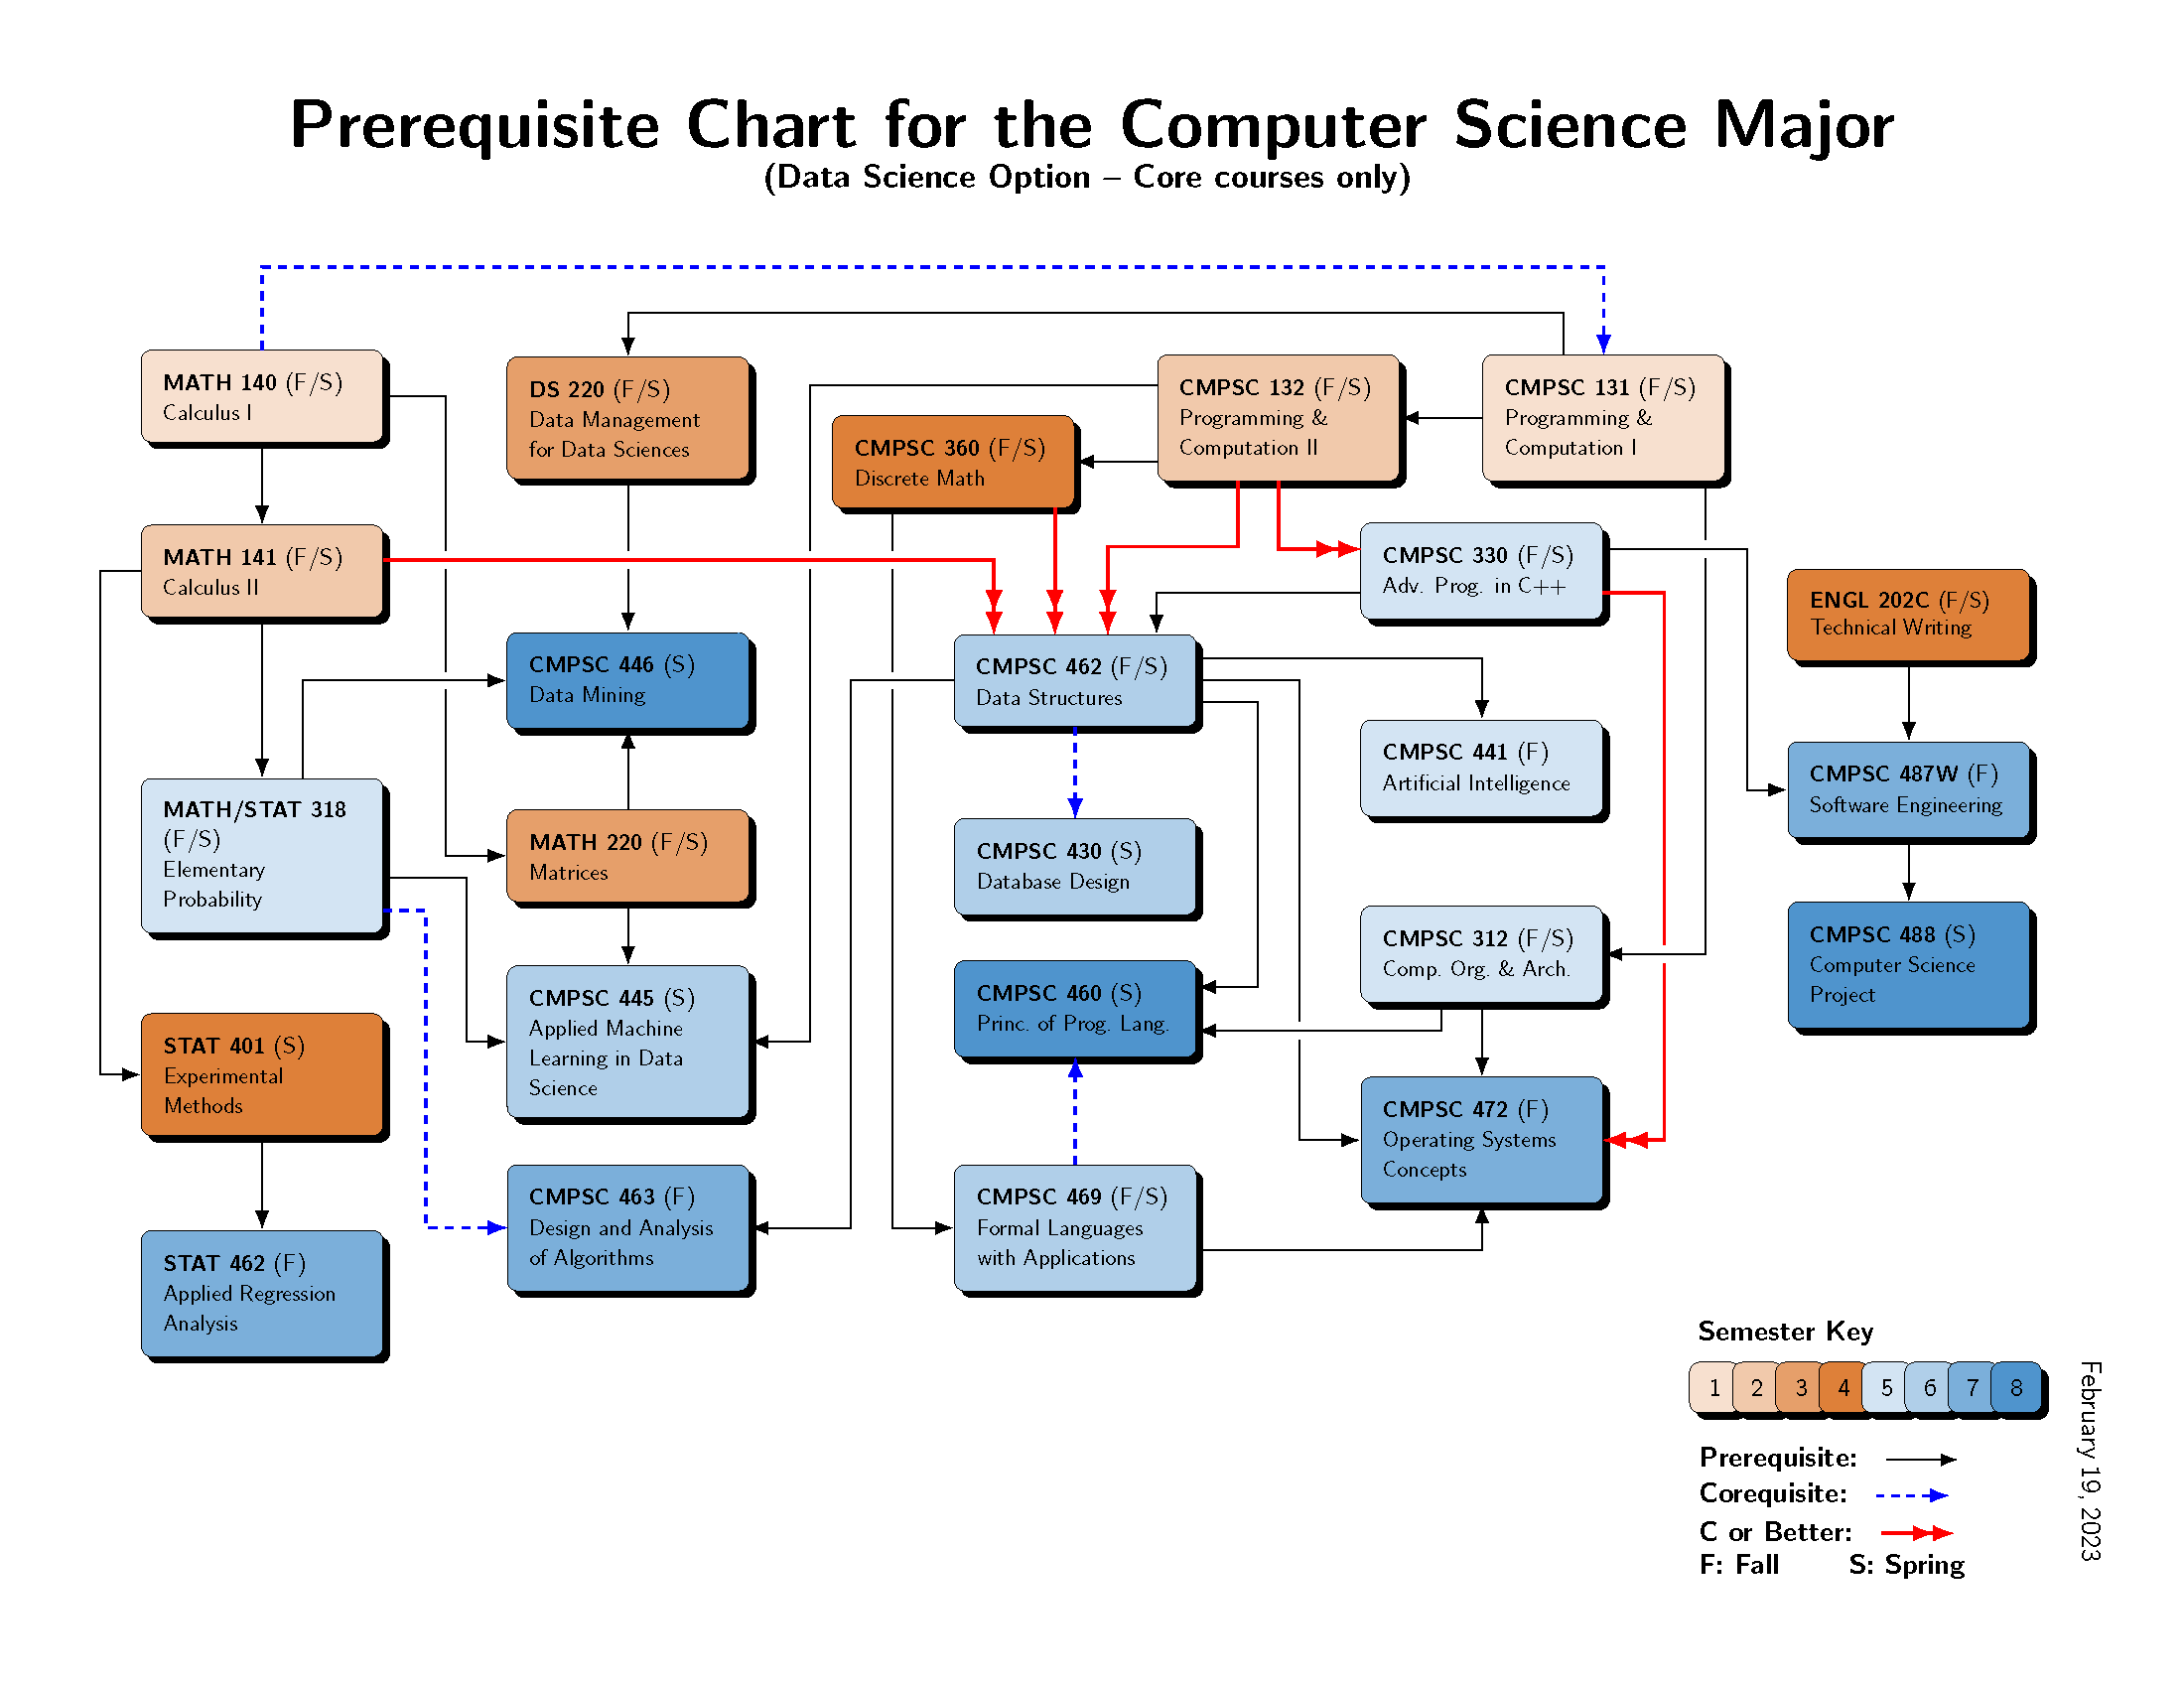 Prerequisite Chart - Data Science Option